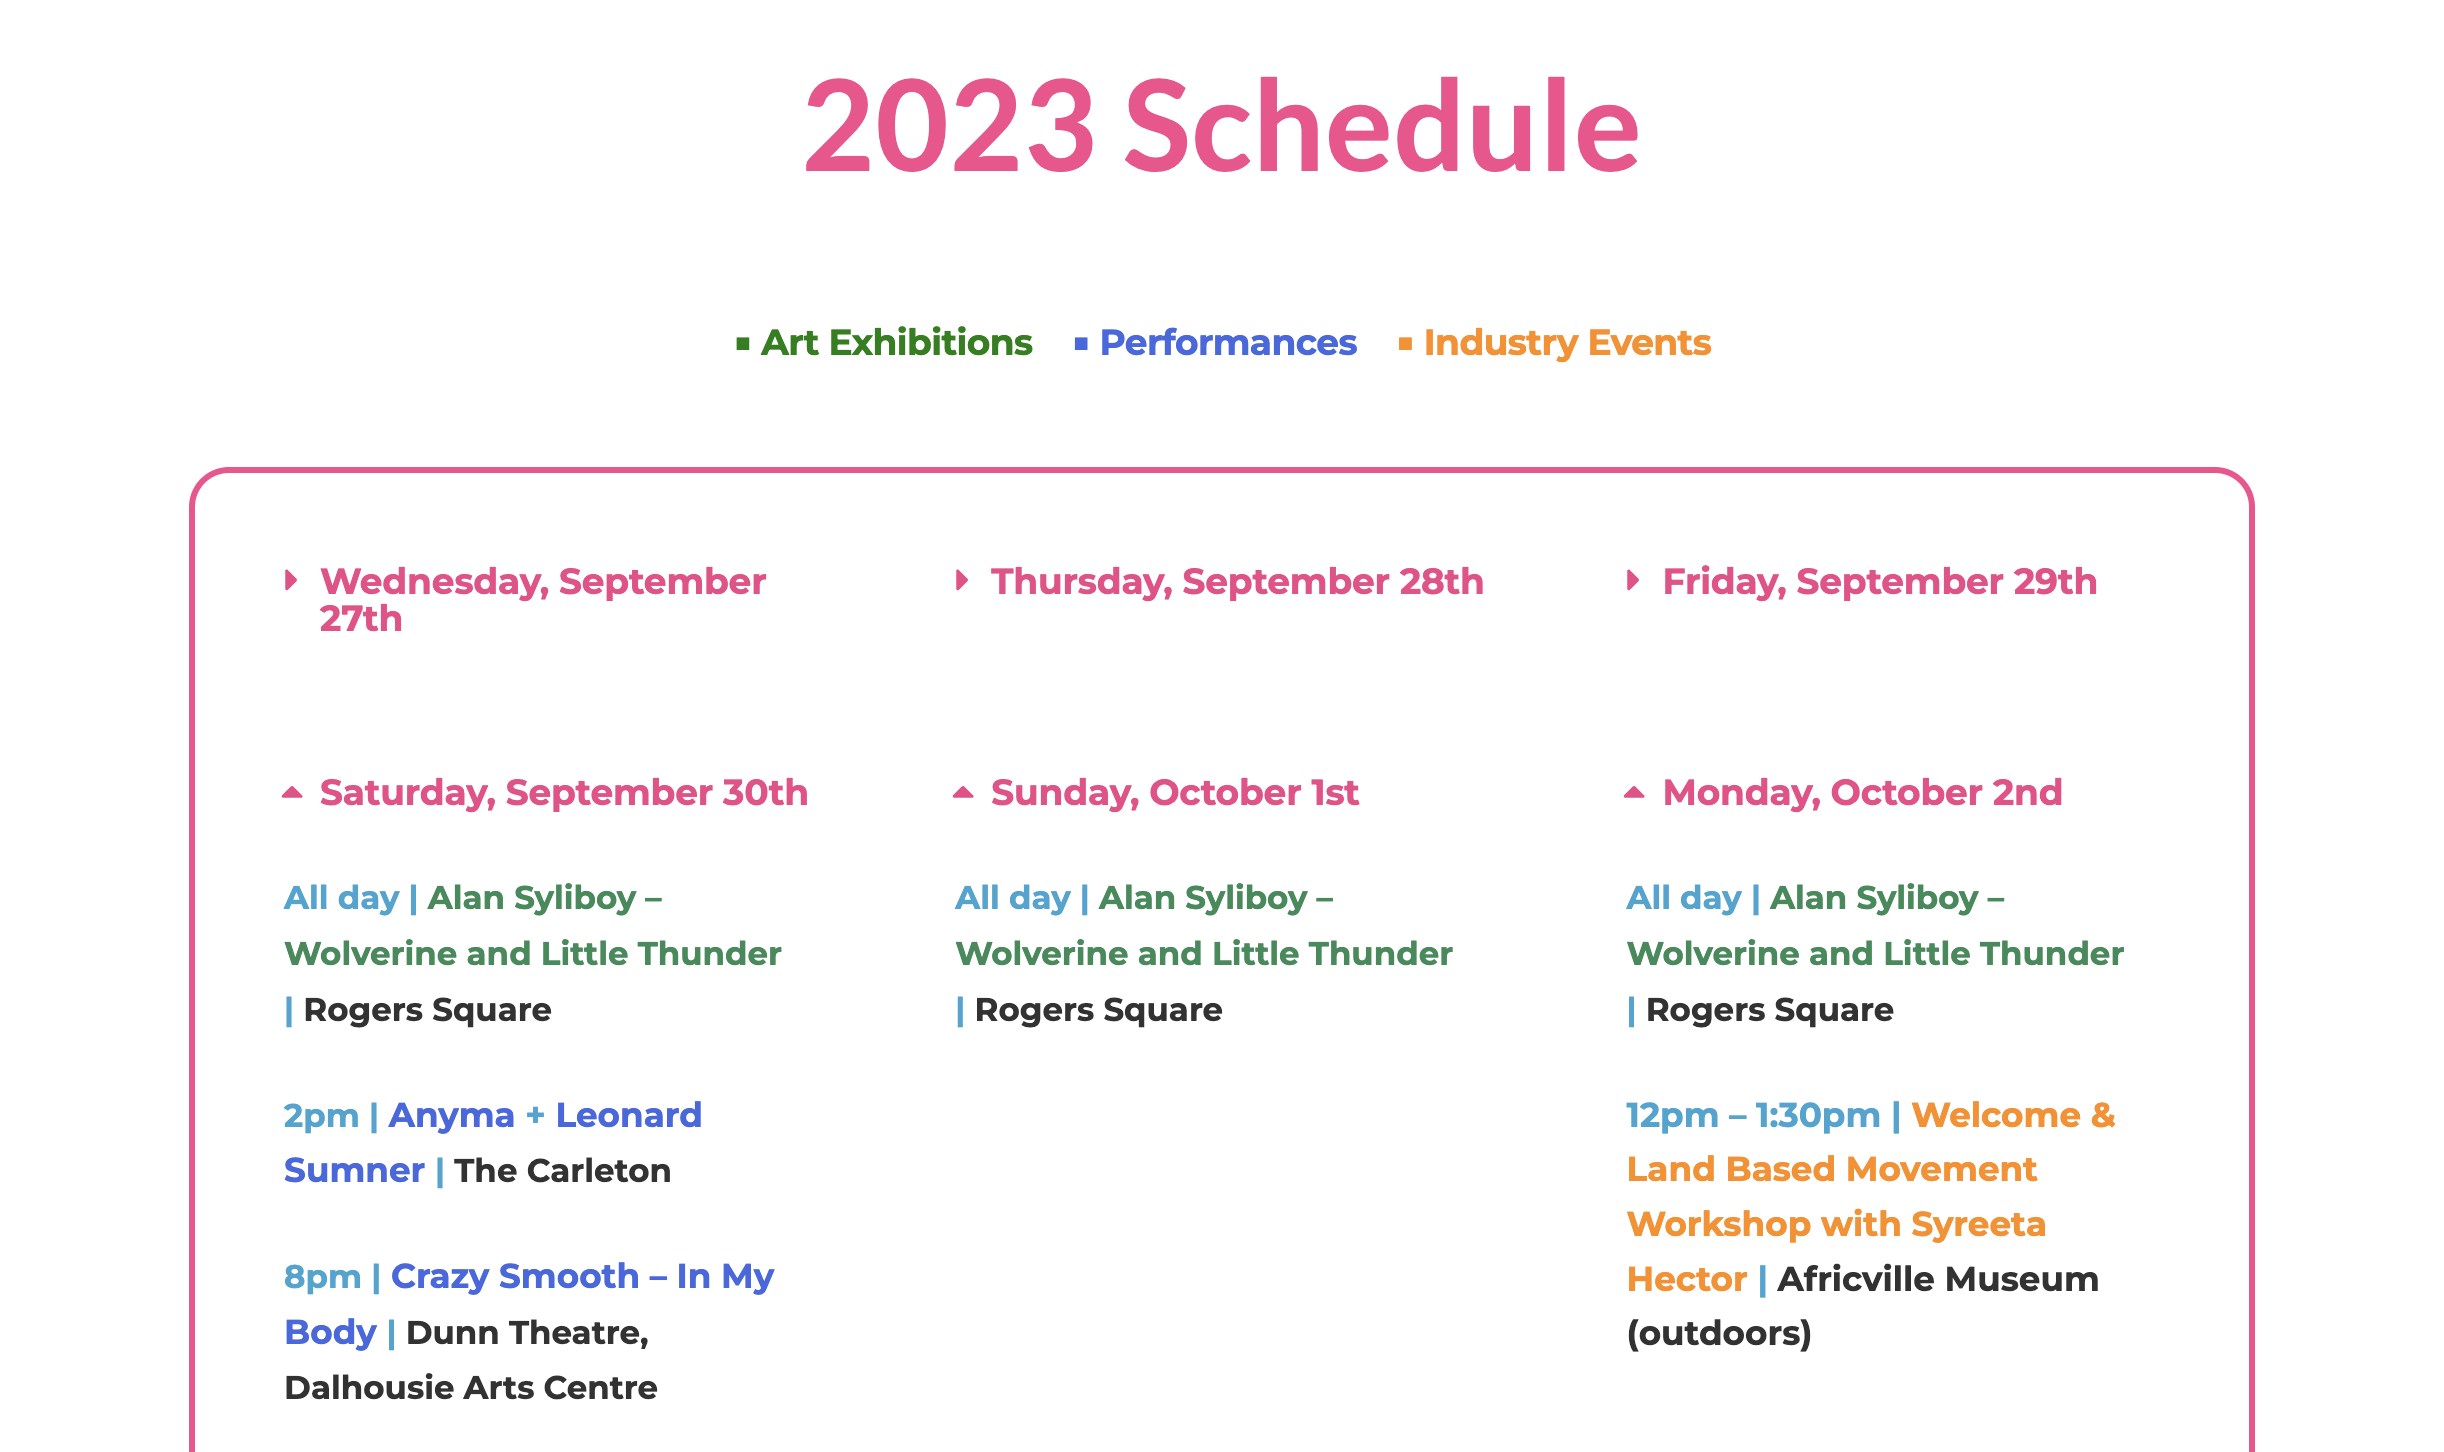 Prismatic's Festival schedule in 2023